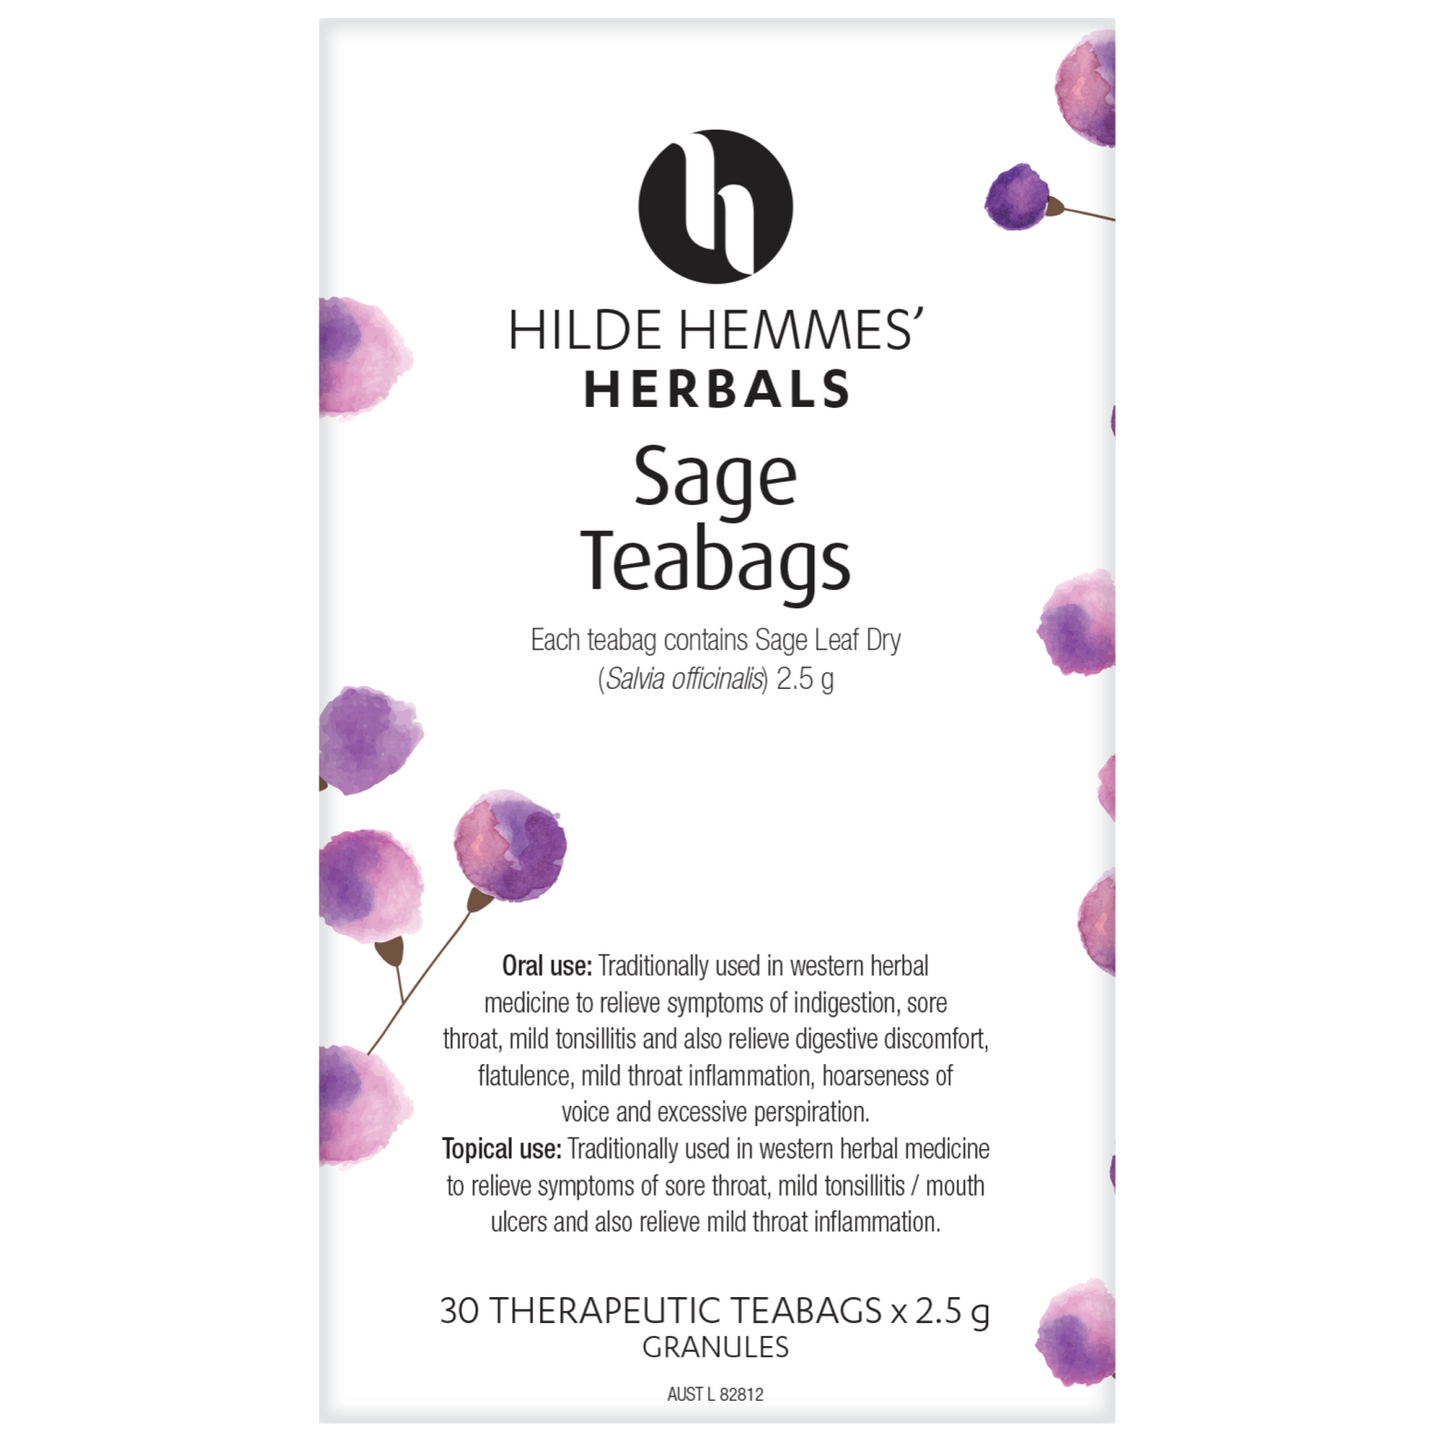 Hilde Hemmes Herbal's Tea 50g (Loose Leaf) Or 30 Tea Bags, Sage Leaf